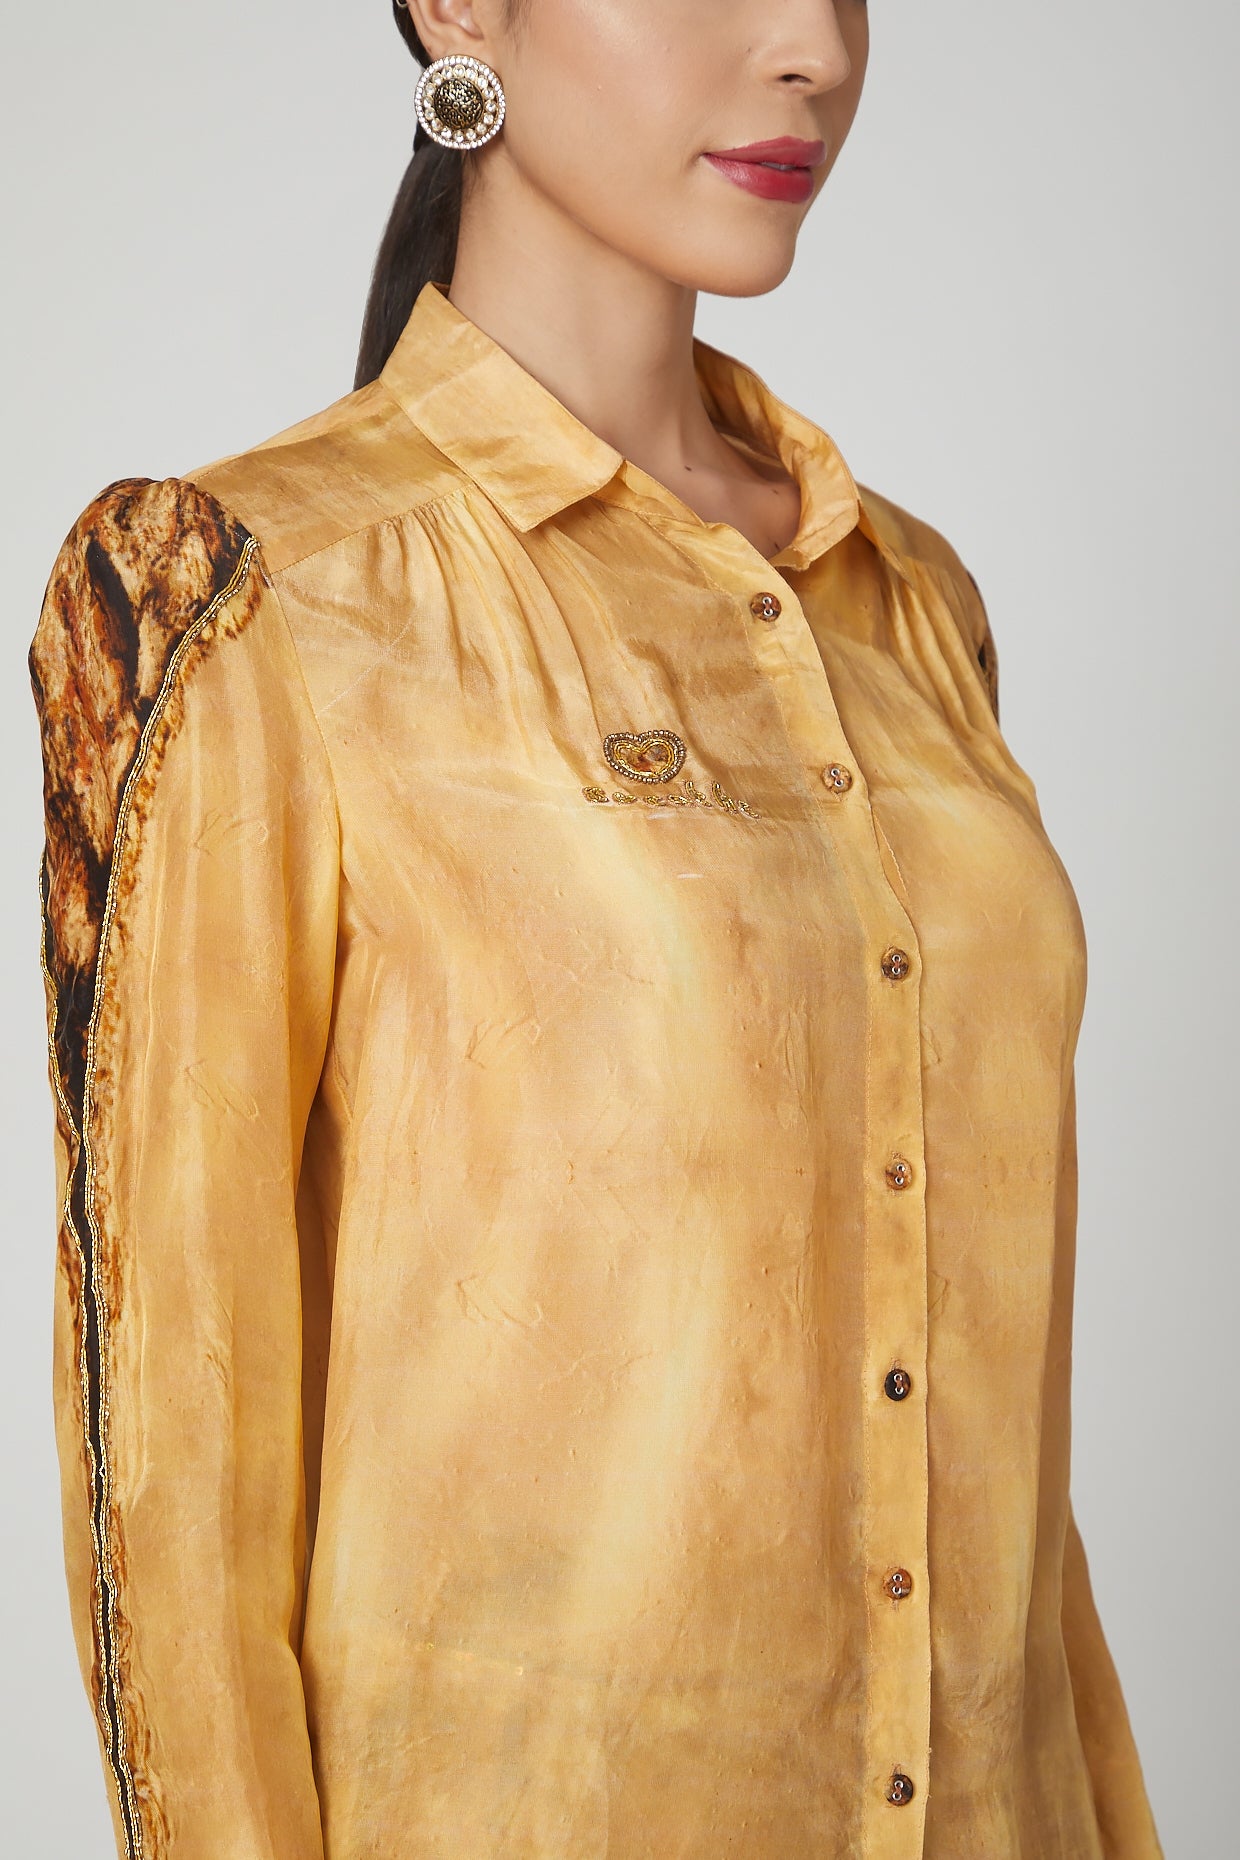 Gold & Brown Digital Printed Skirt Set